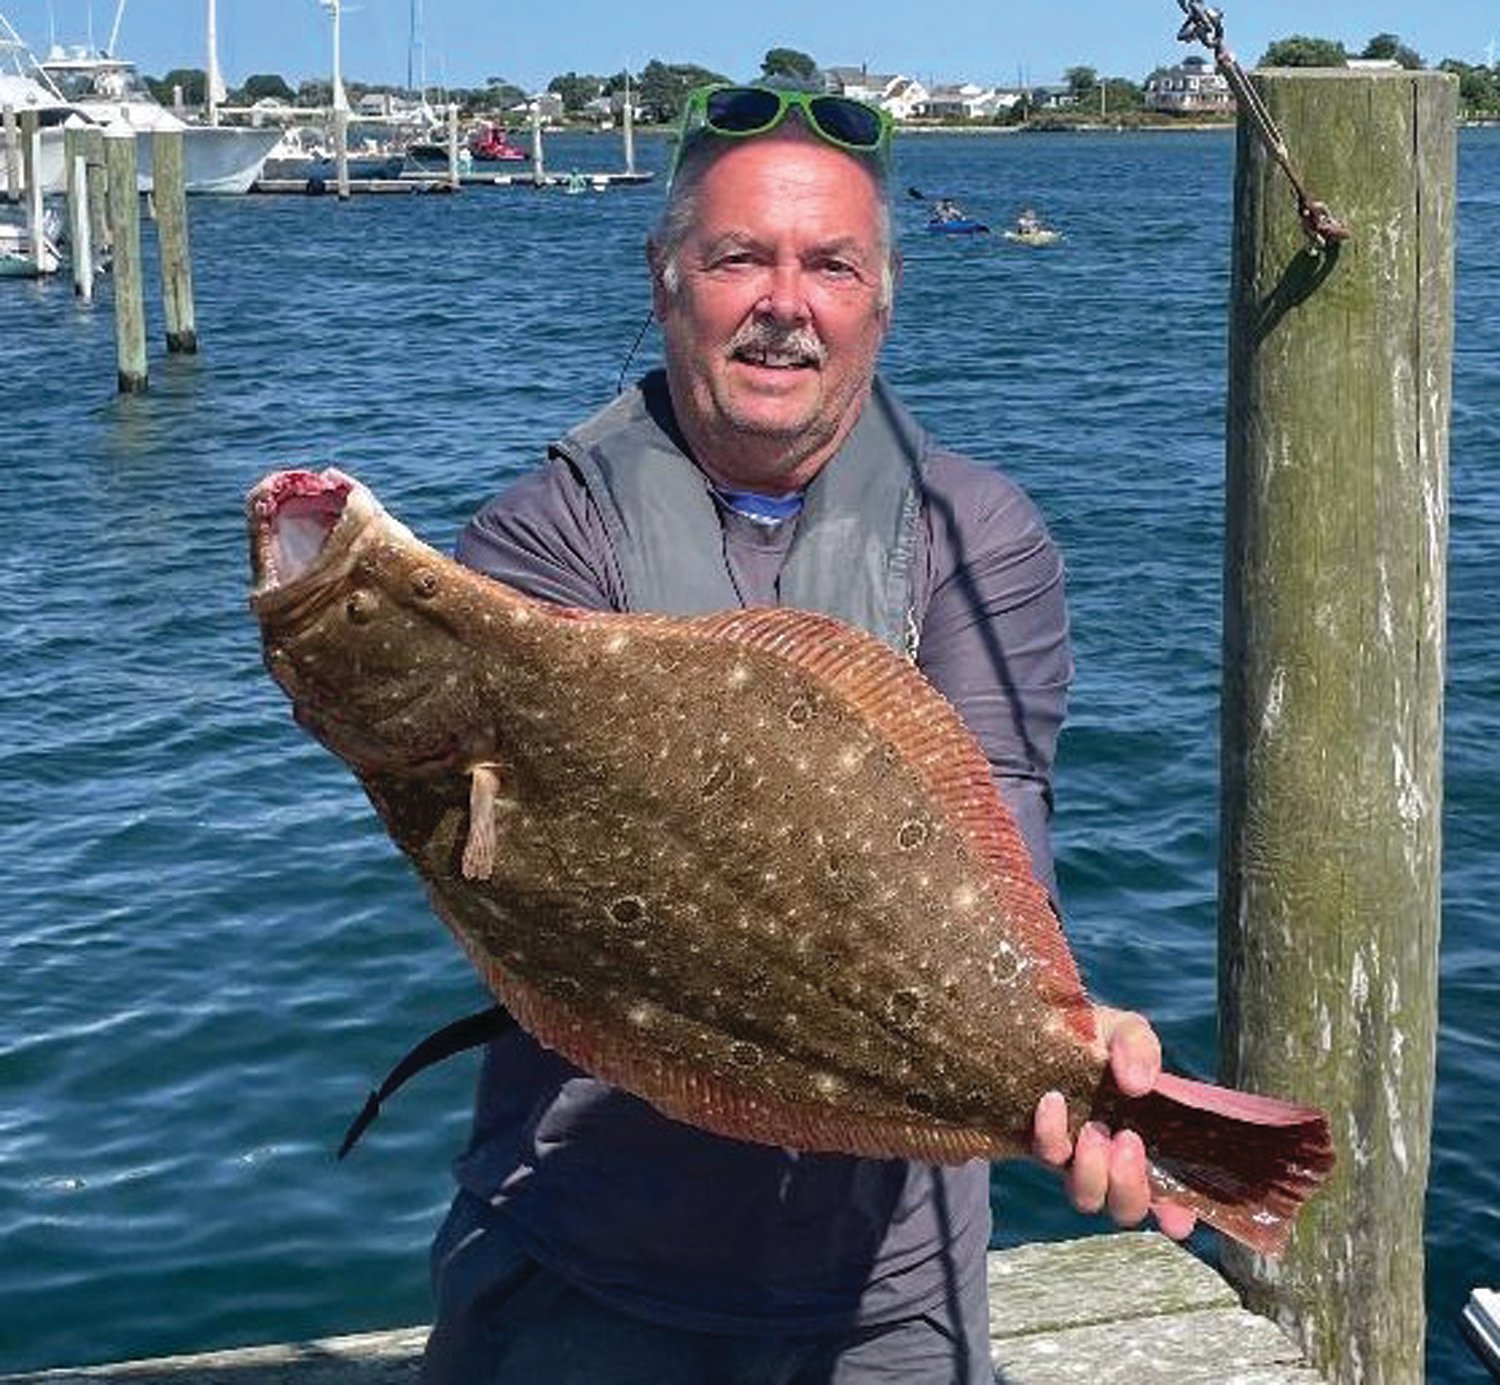 FLUKEZILLA: Tom Torrico of Massachusetts with the 14-pound, 29-inch fluke (summer flounder) he caught fishing off Block Island last week.